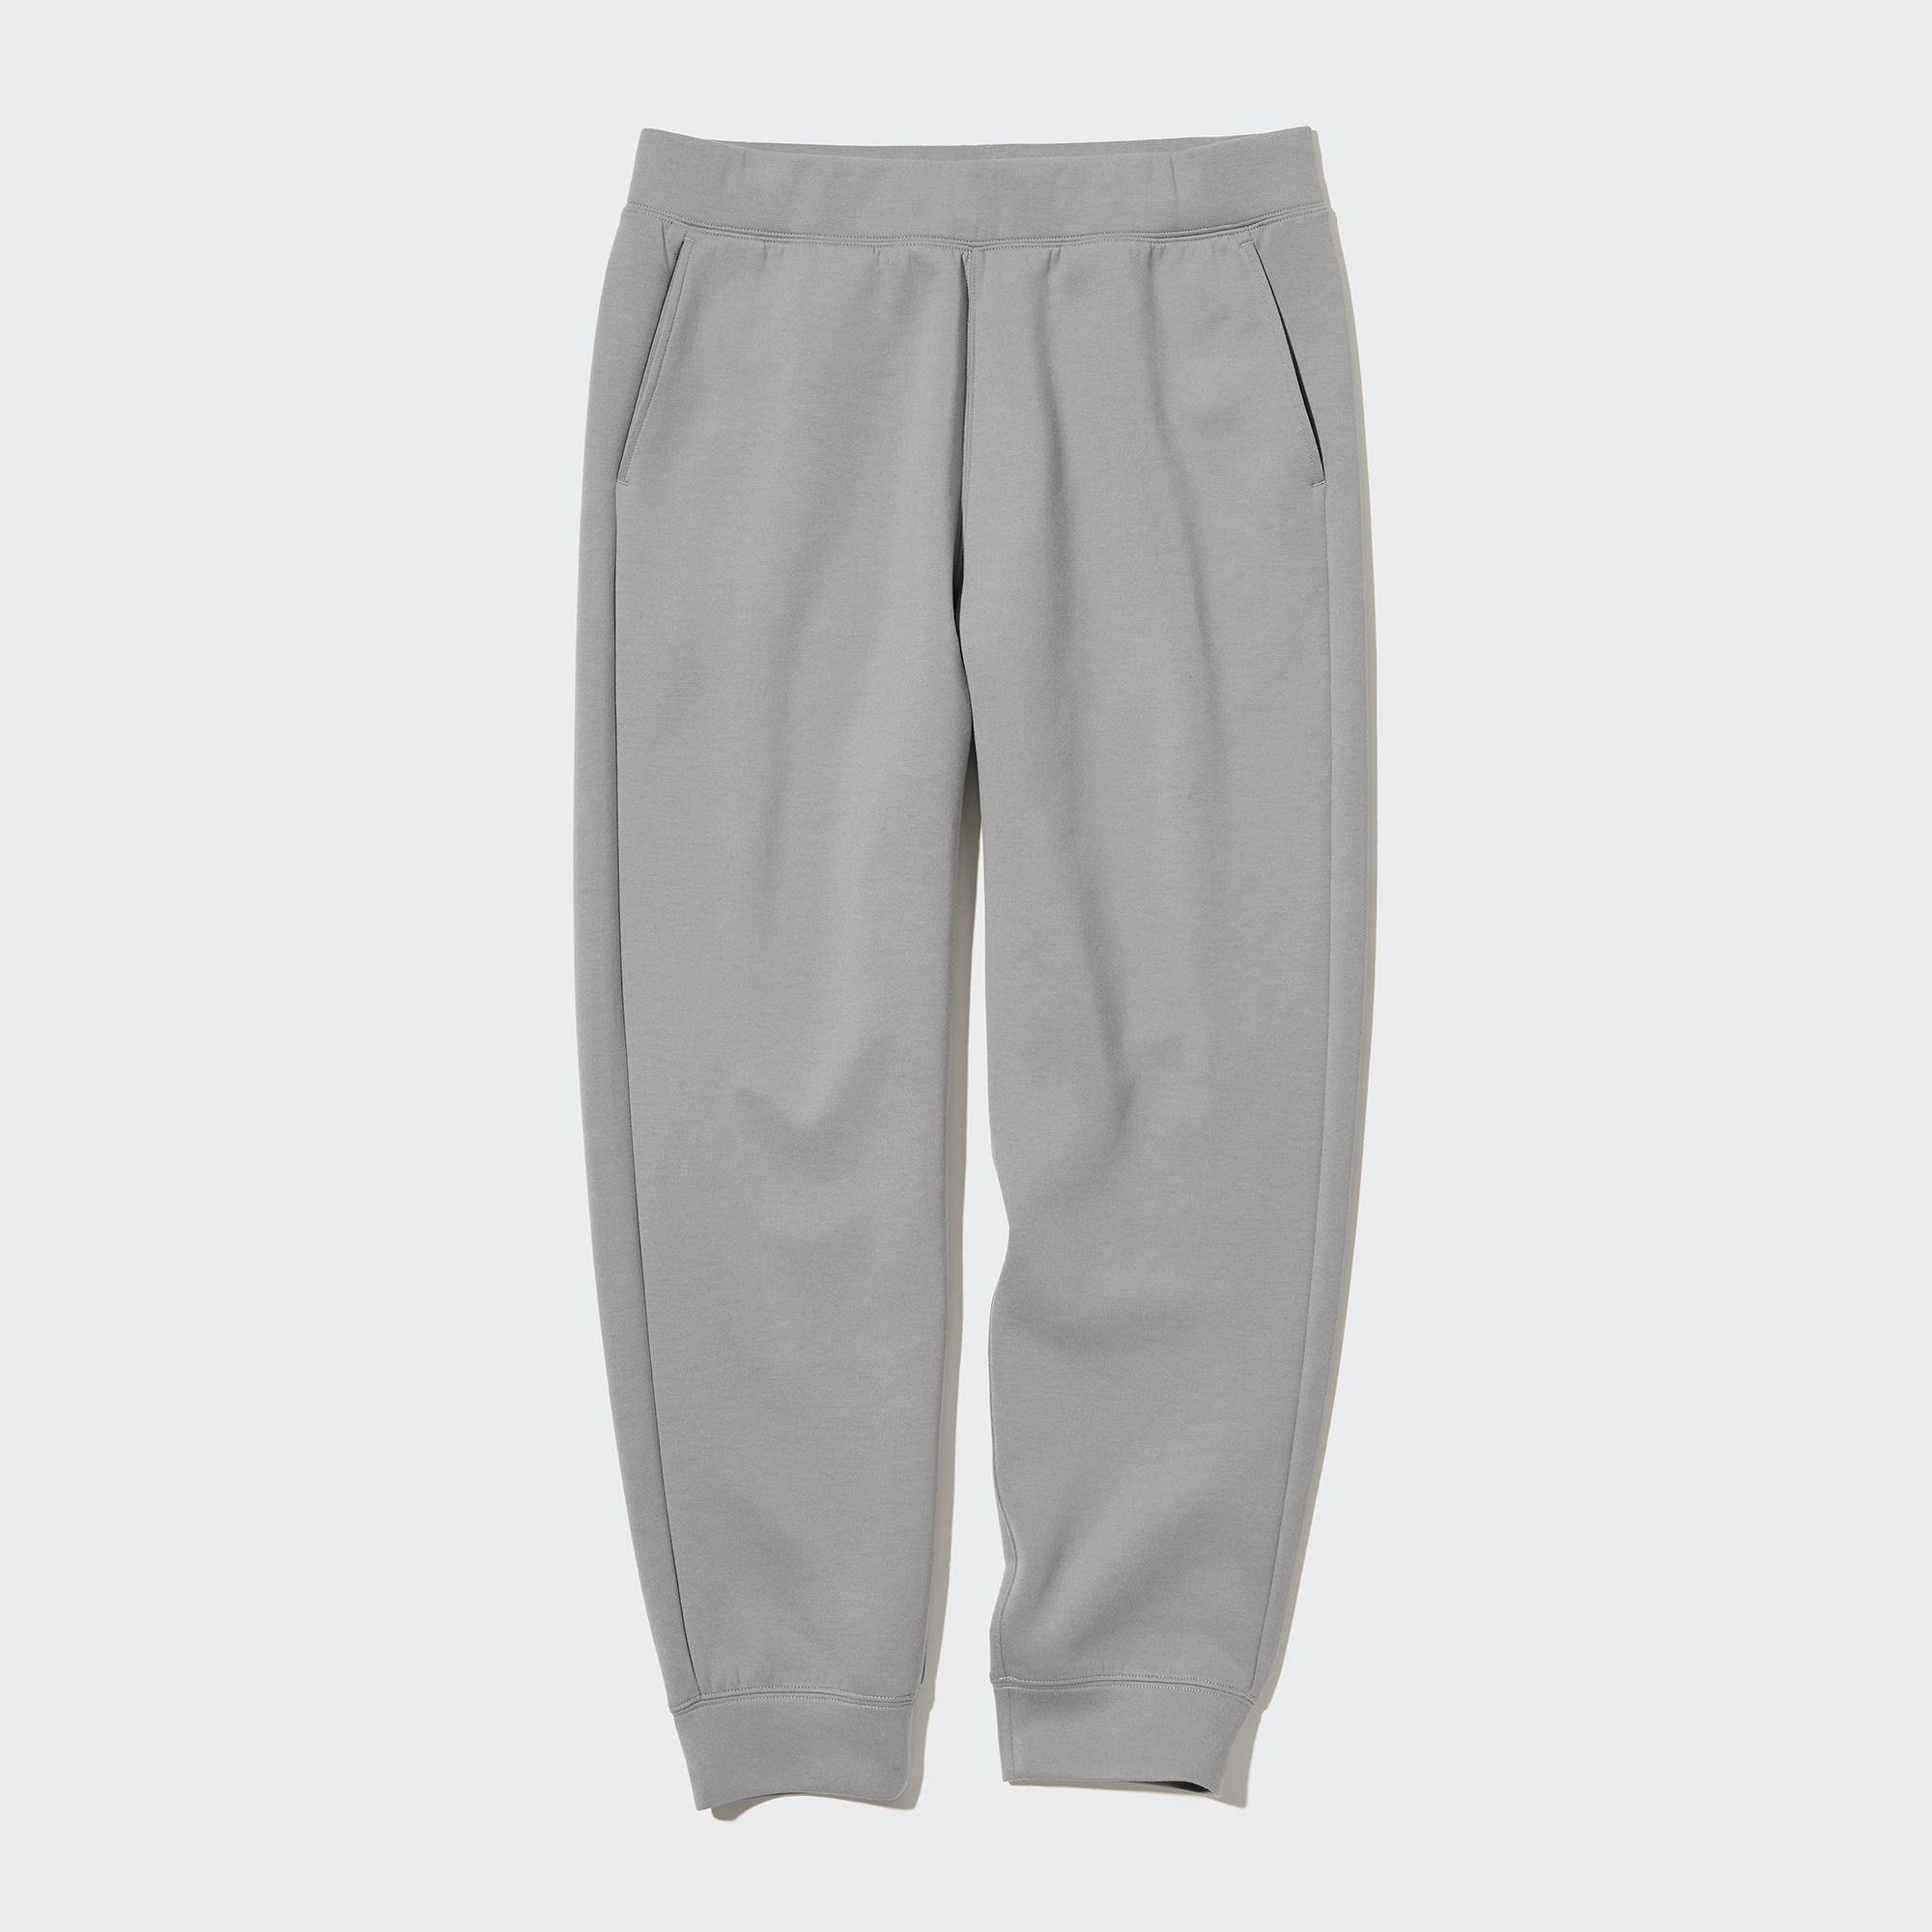 Uniqlo Men Clothing Pants Sweatpants Stretch Dry Sweatpants 